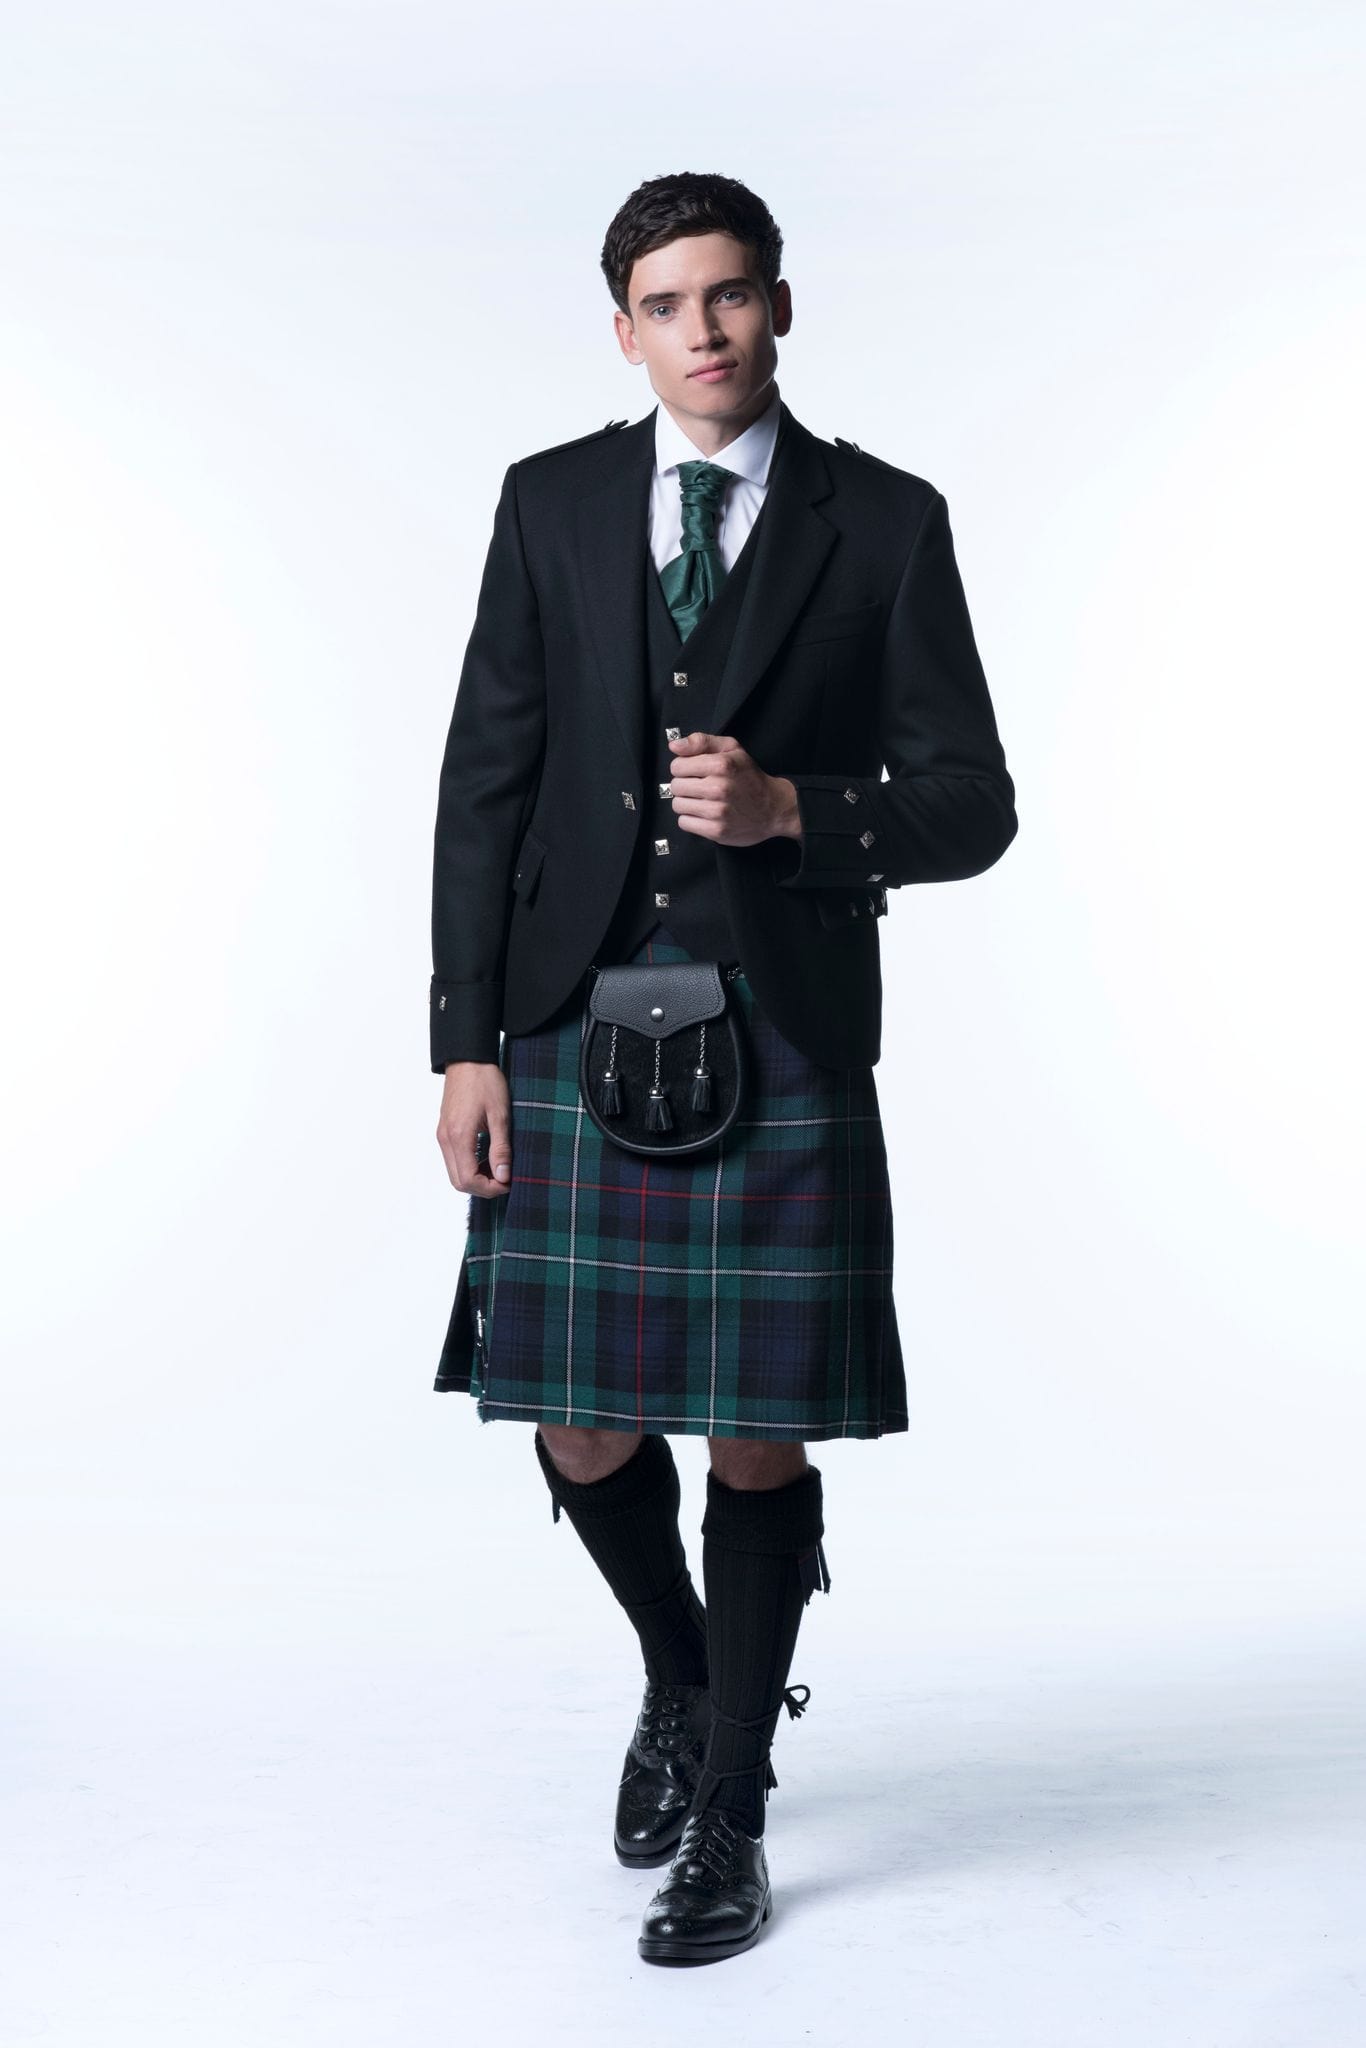 Starter Argyll Kilt Outfit - MacGregor and MacDuff